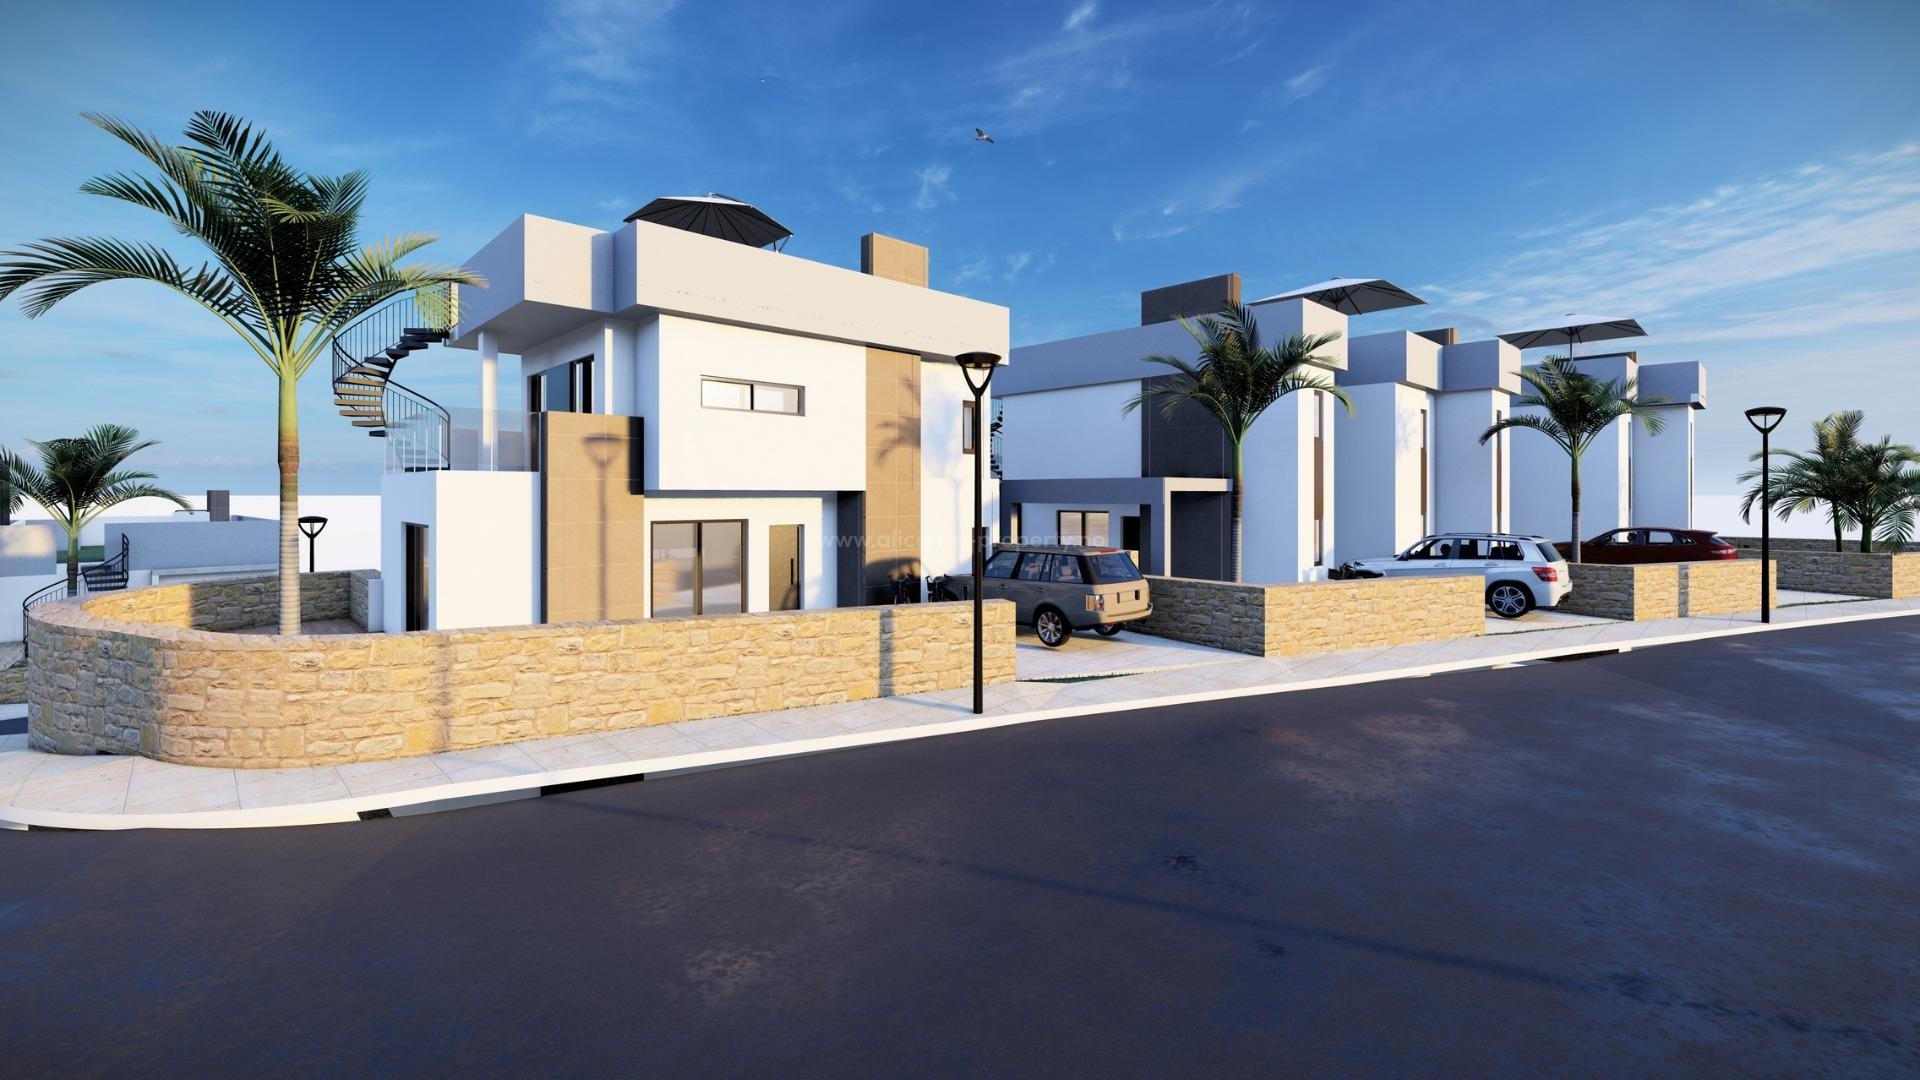 Helt nye hus/villaer i La Finca Golf, Algorfa, 2 soverom, 2 bad, terrasse og solarium, halv-kjeller og hage med parkering. Mulig med privat basseng